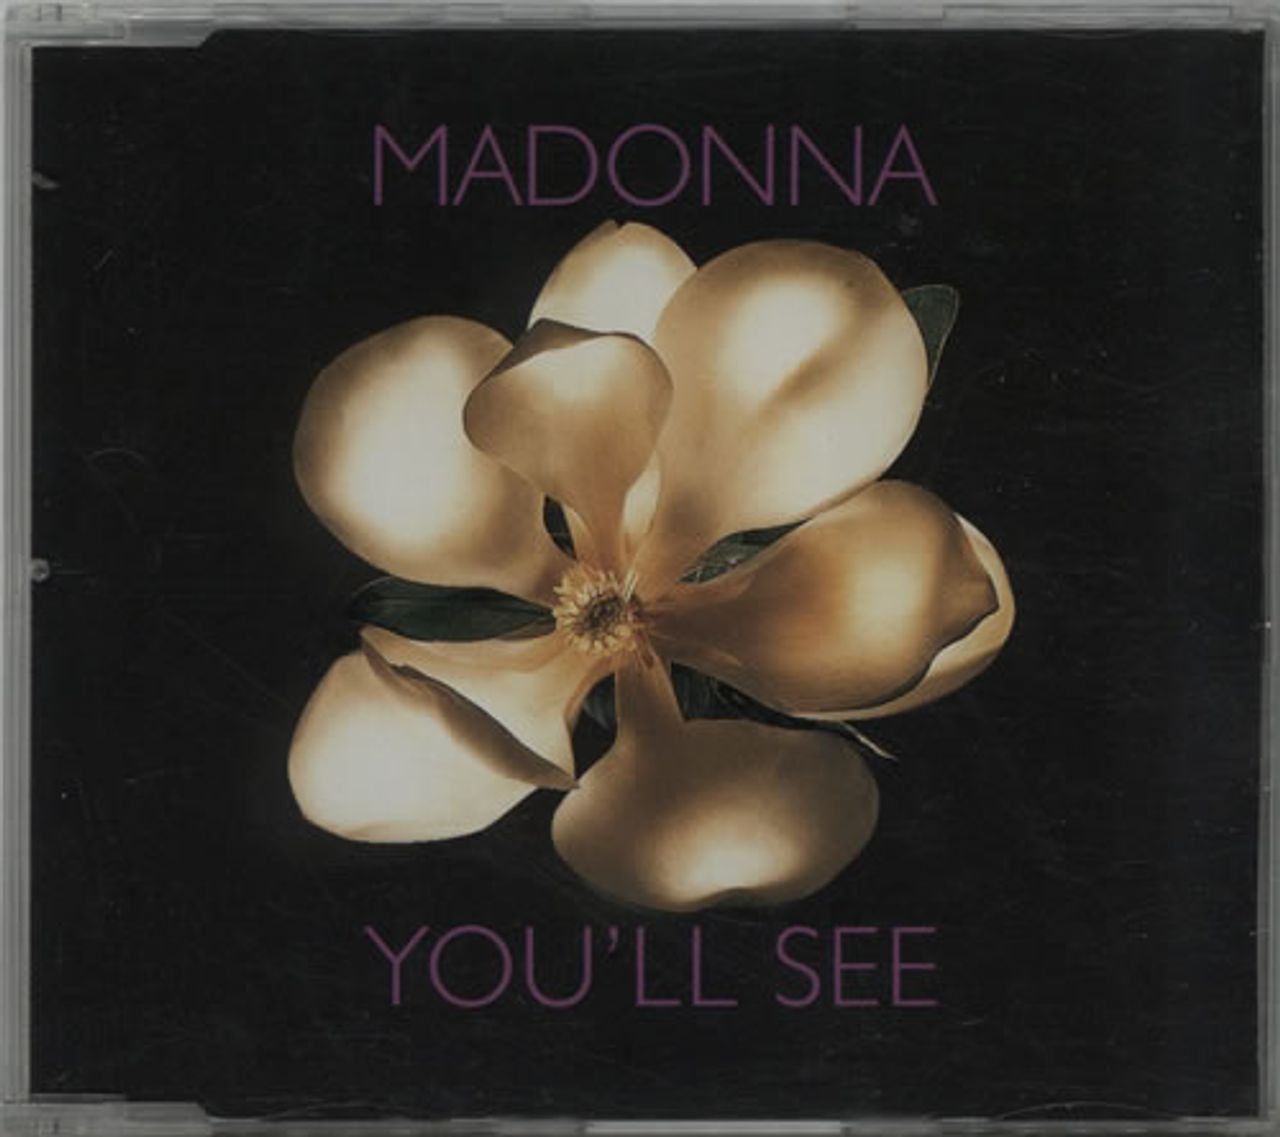 Madonna You'll See German CD single — RareVinyl.com